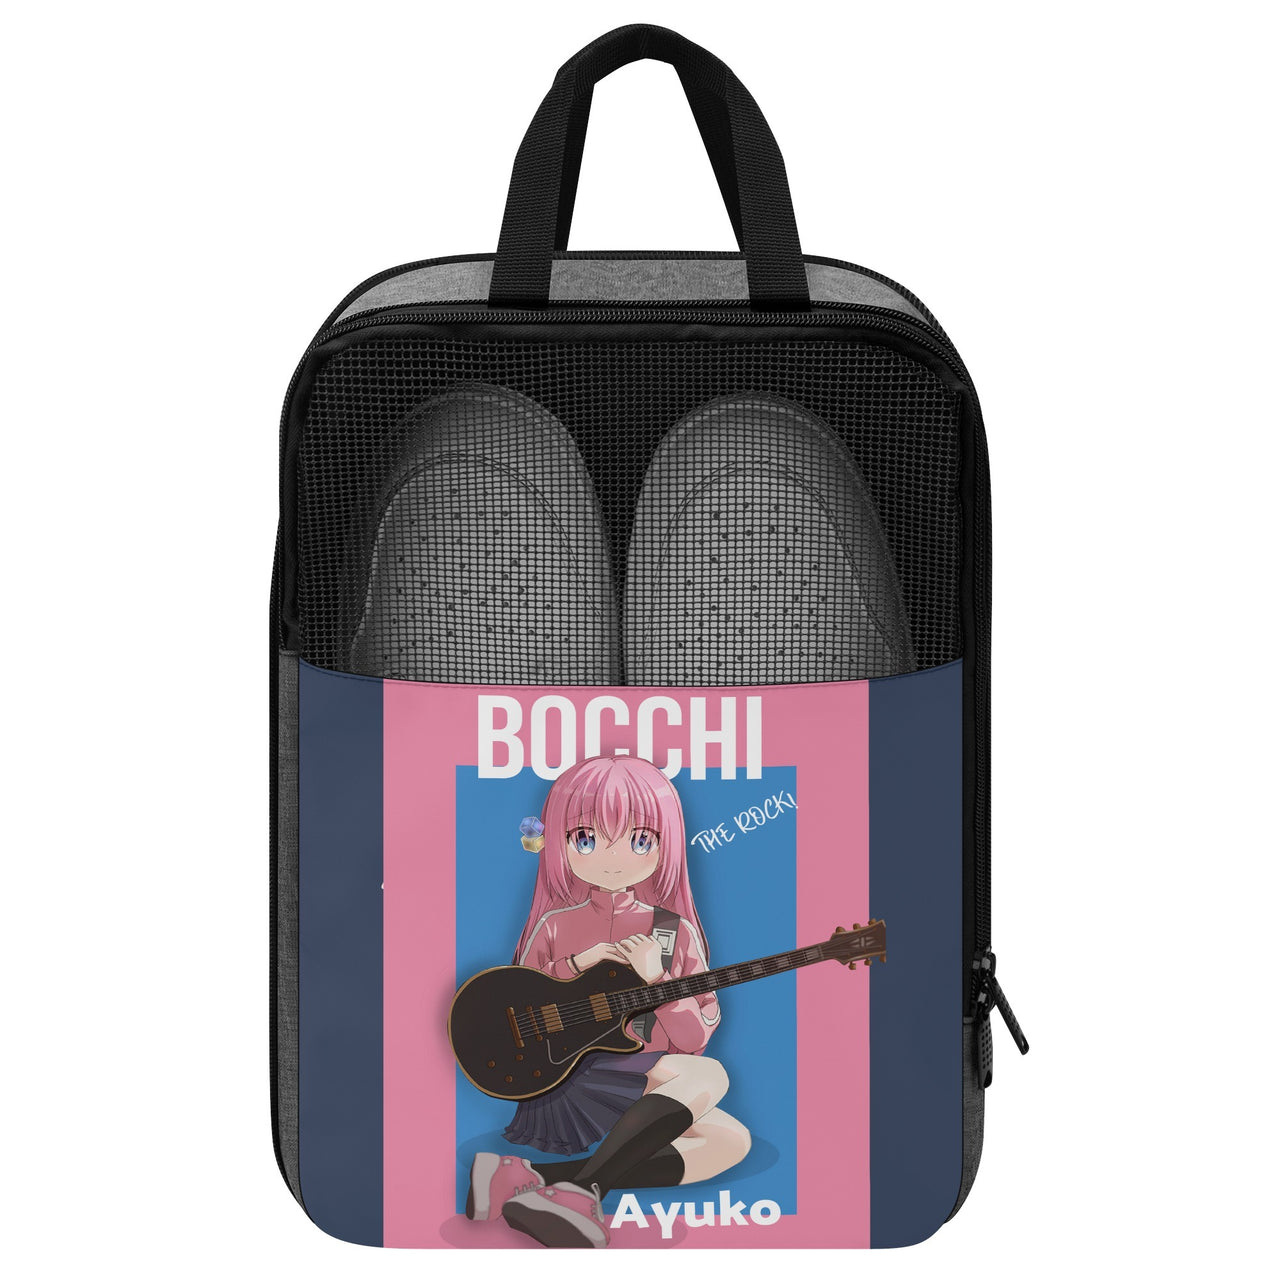 Bocchi the Rock Shoe Bag